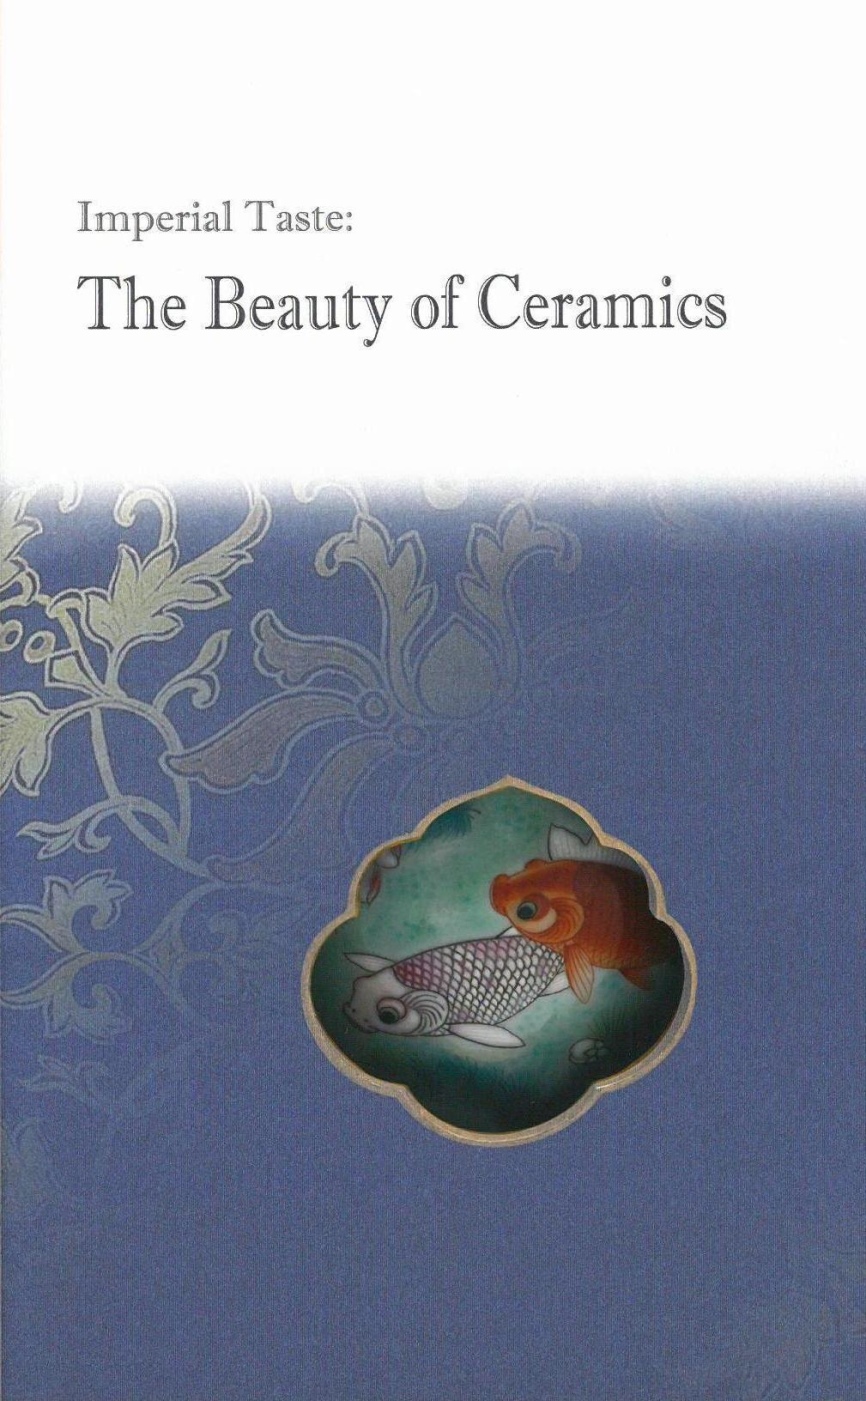 Imperial Taste: The Beauty of Ceramics